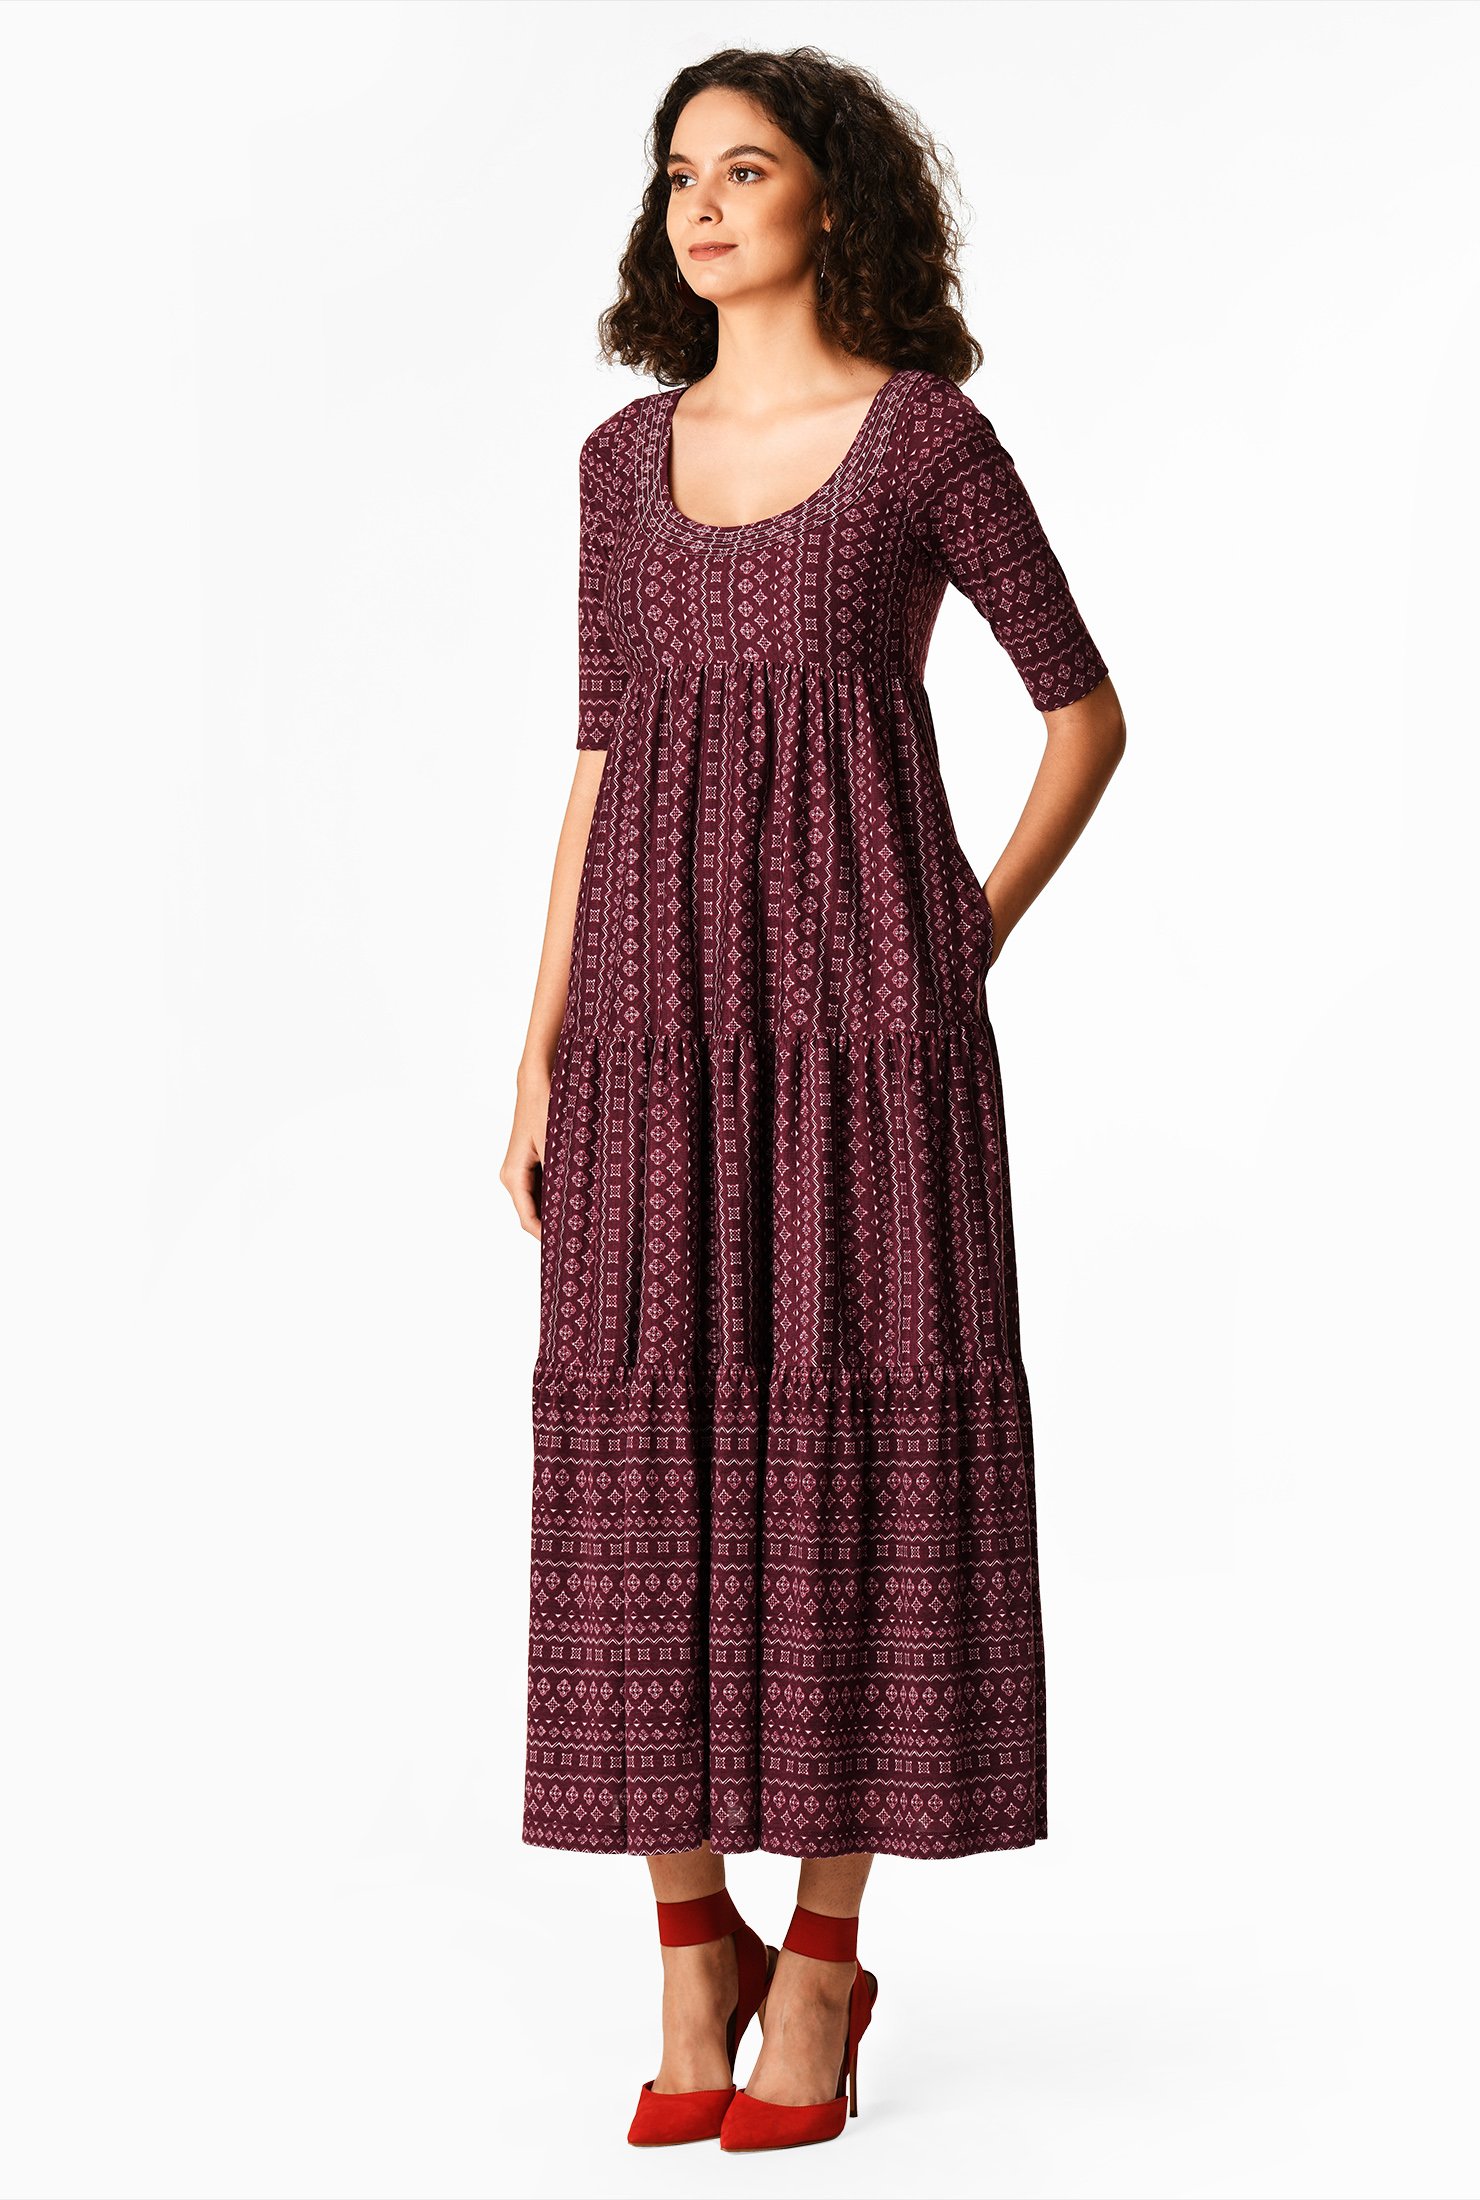 Shop Graphic print cotton knit empire tiered dress | eShakti